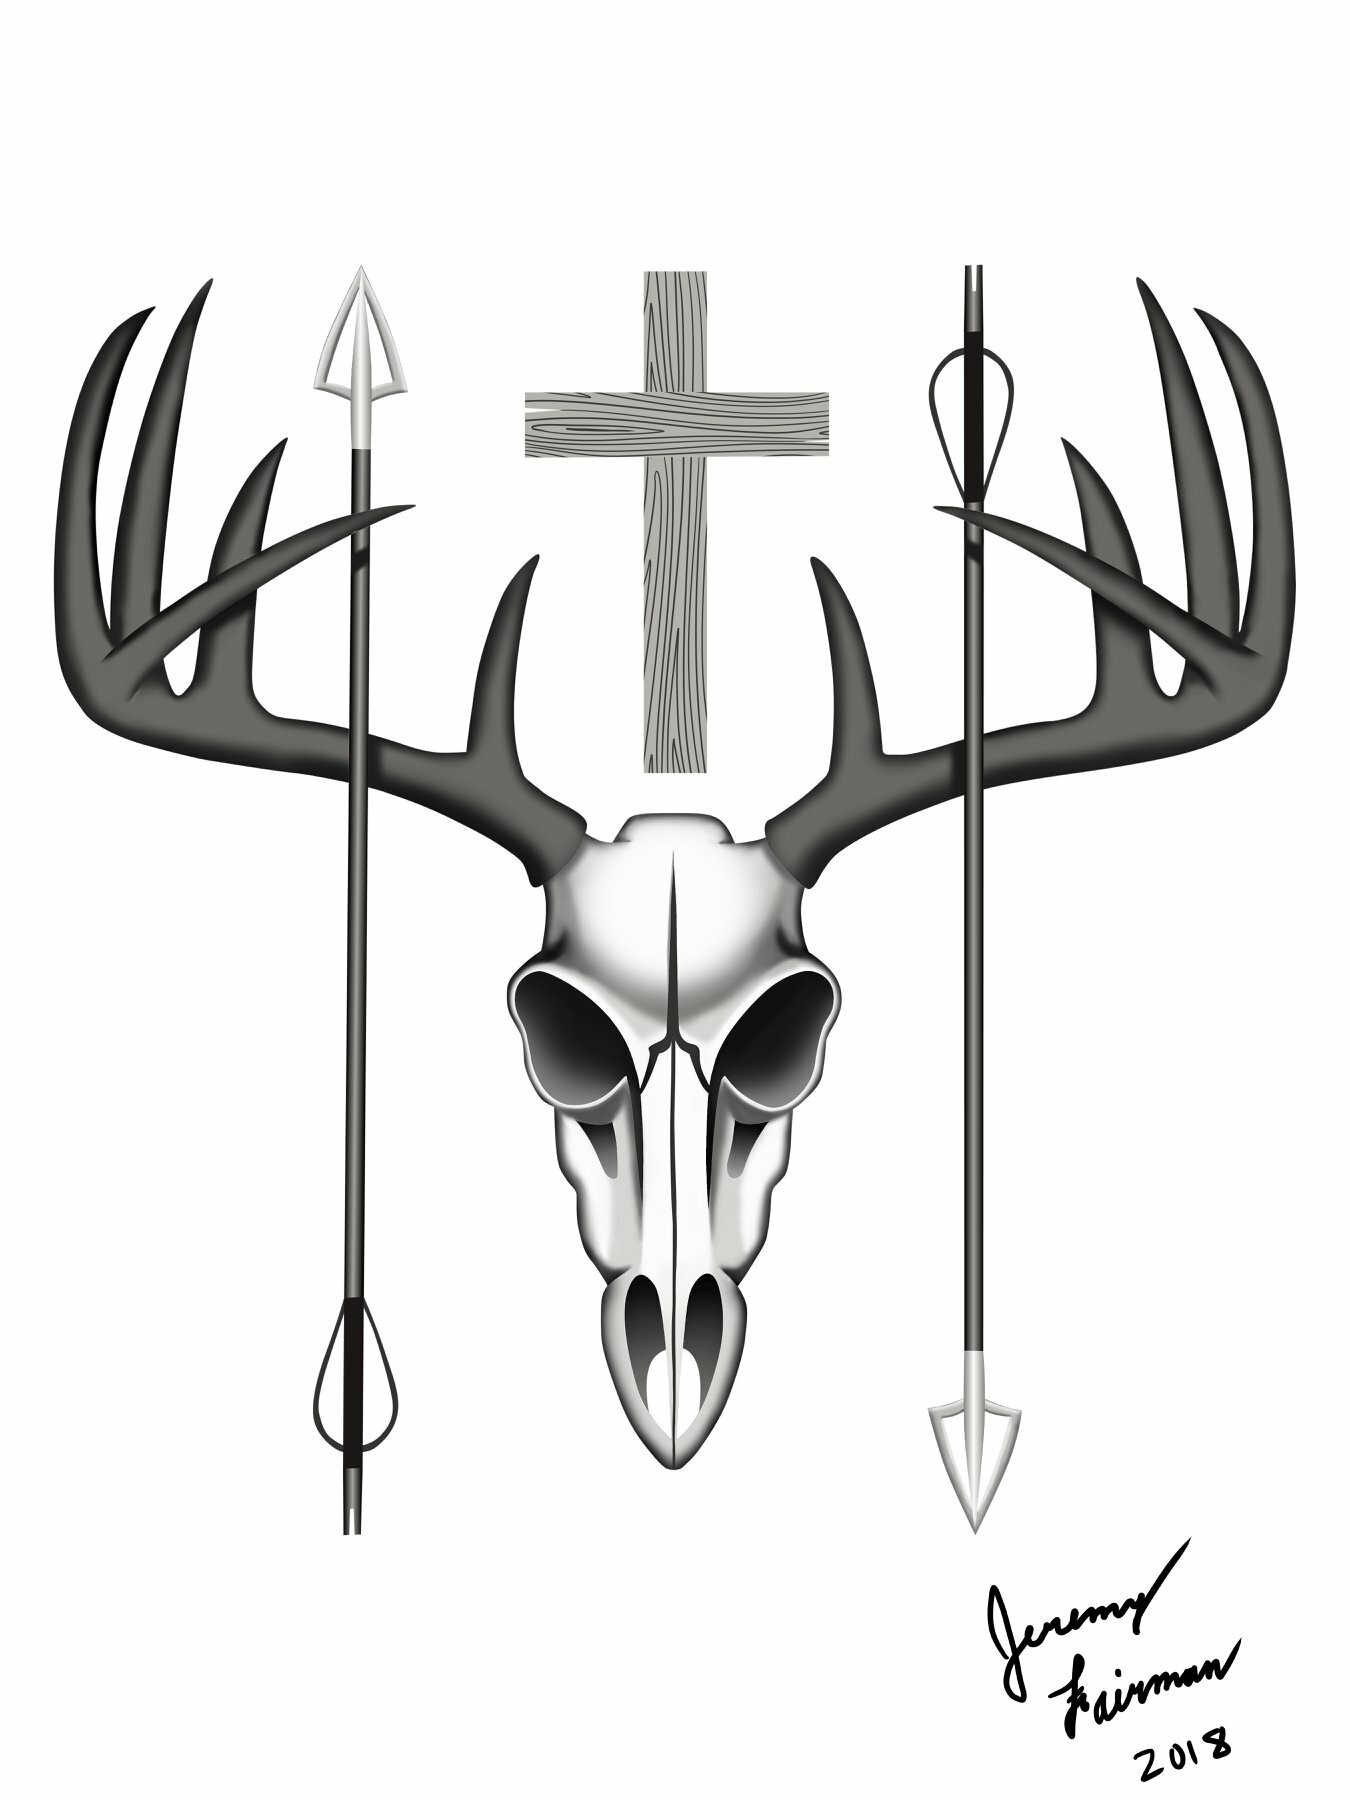 Jeremy Fairman Deer Skull Tattoo Design 18